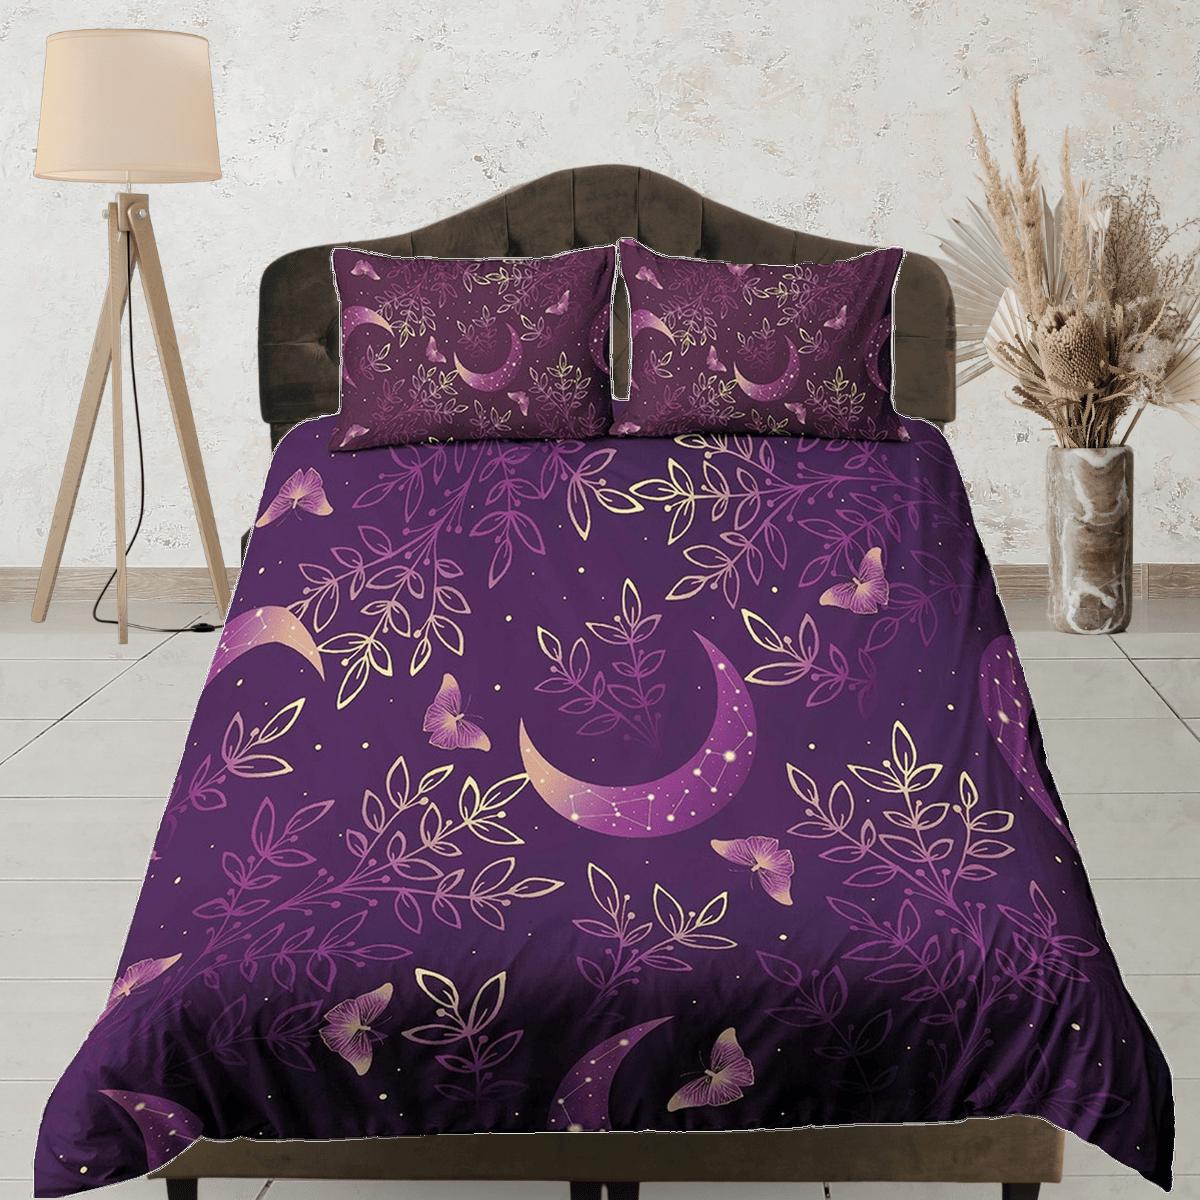 daintyduvet Celestial moon bedding purple, witchy decor dorm bedding, aesthetic duvet cover, boho bedding set full king queen, astrology gifts, gothic